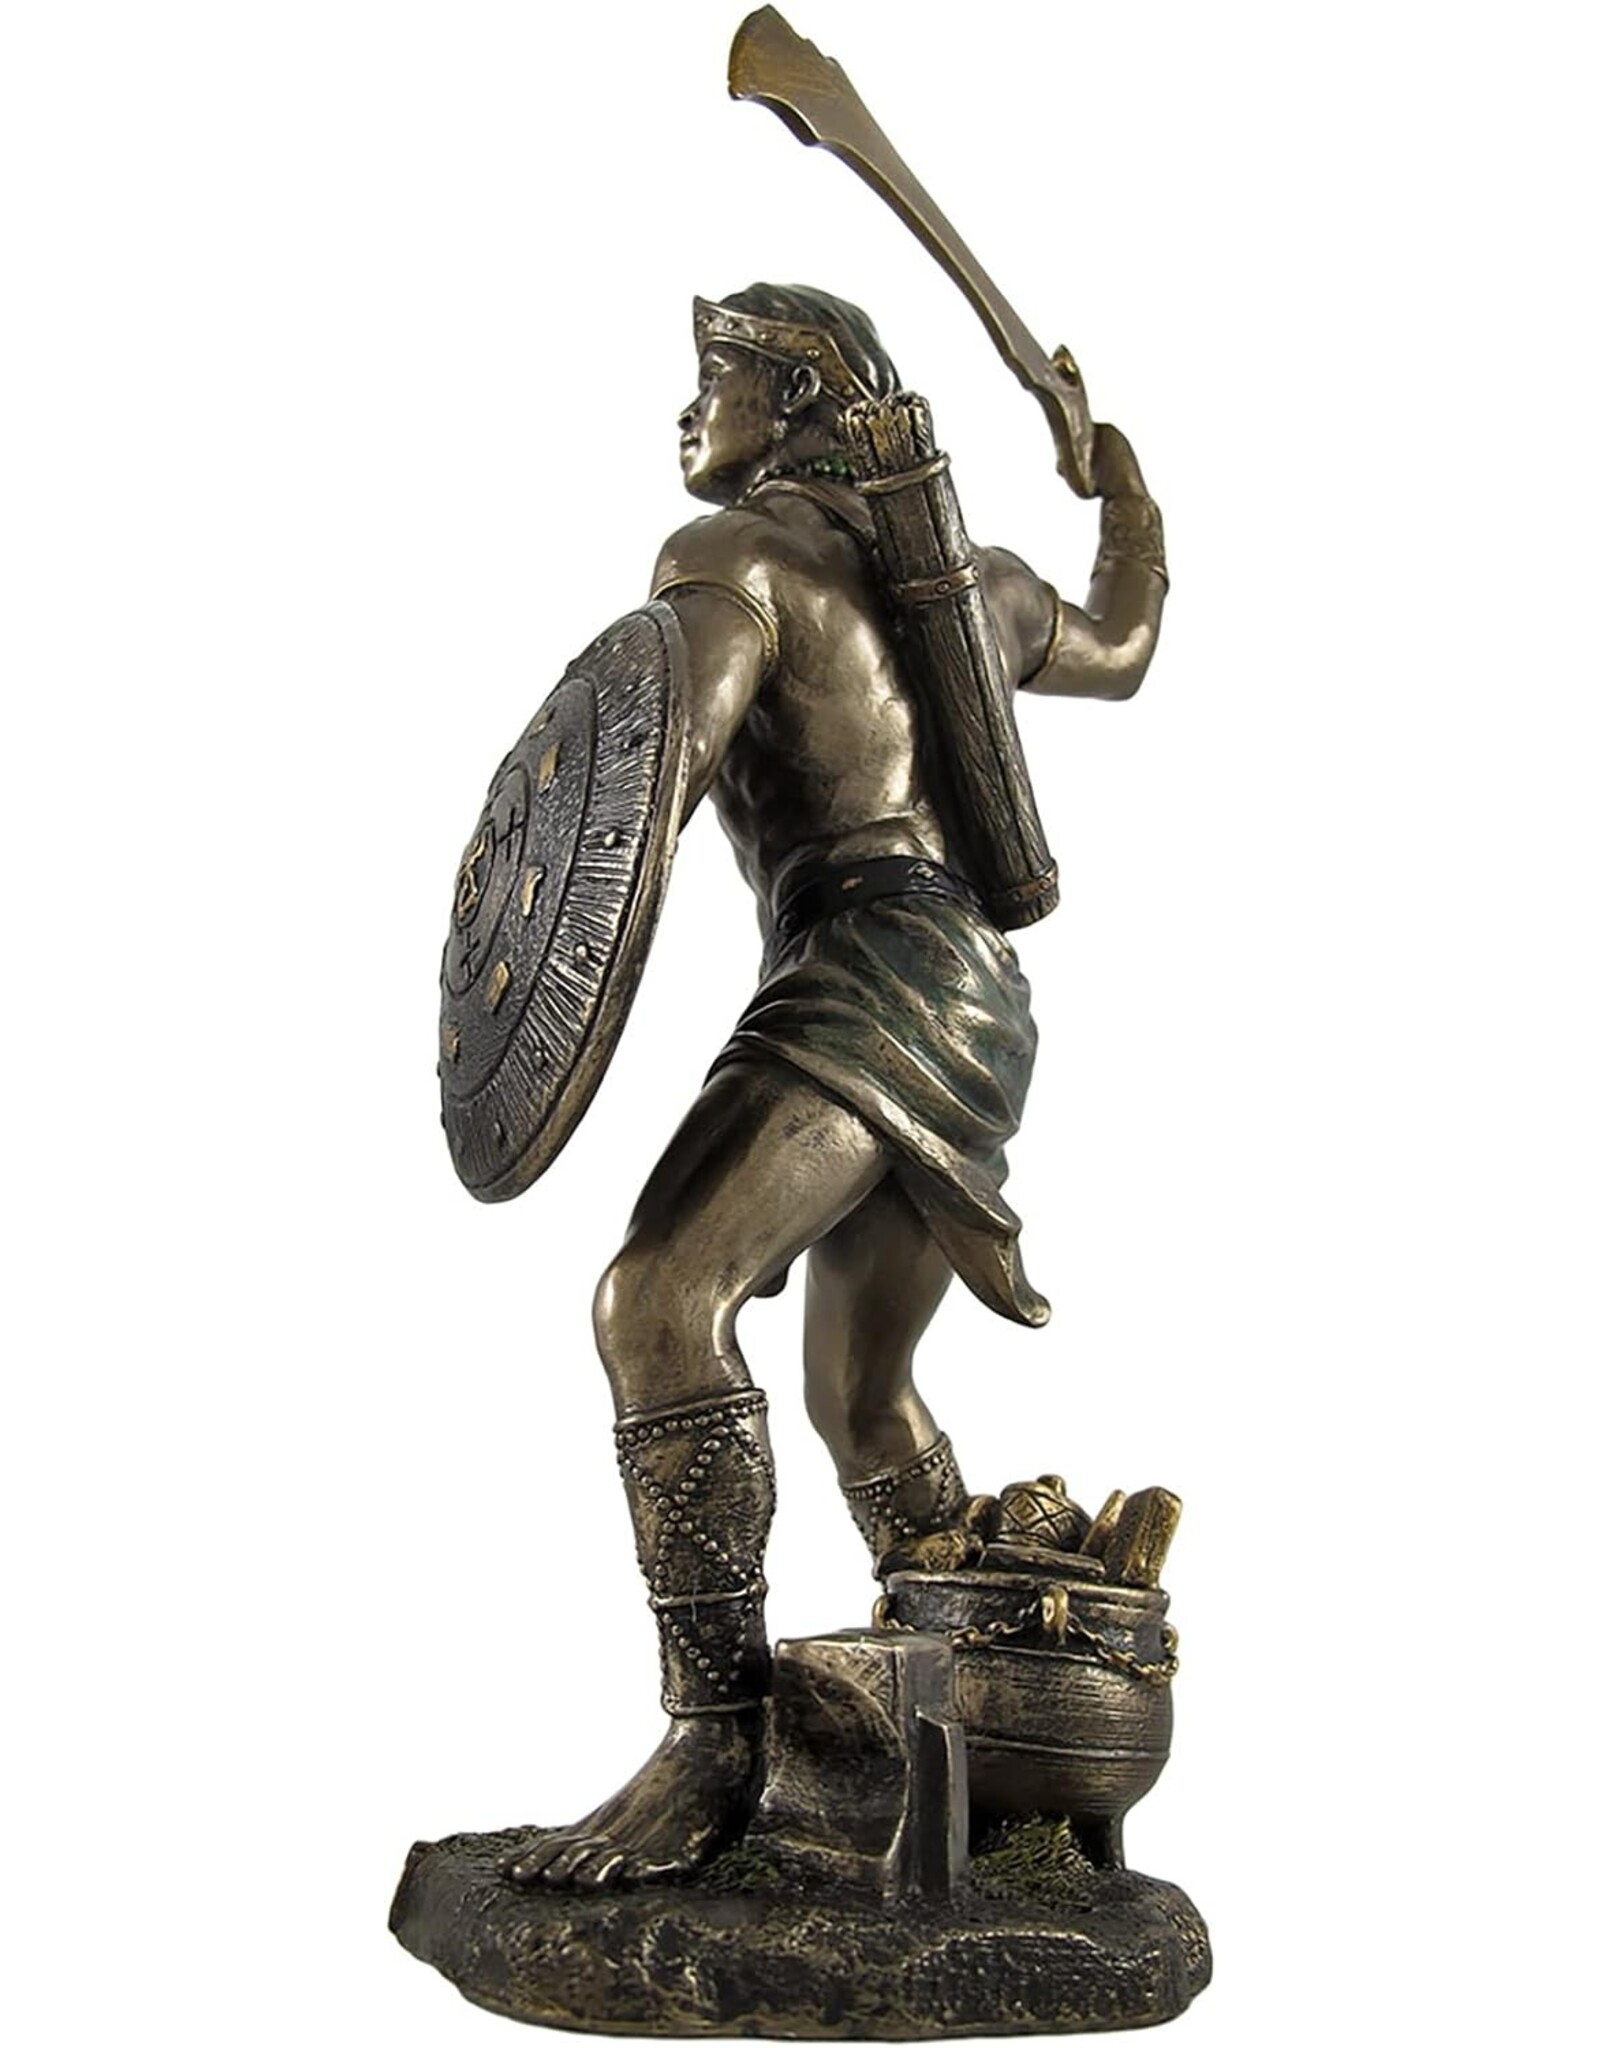 Veronese Design Veronese Design - Ogun (Oggun) God of Wa , Iron and Hunting